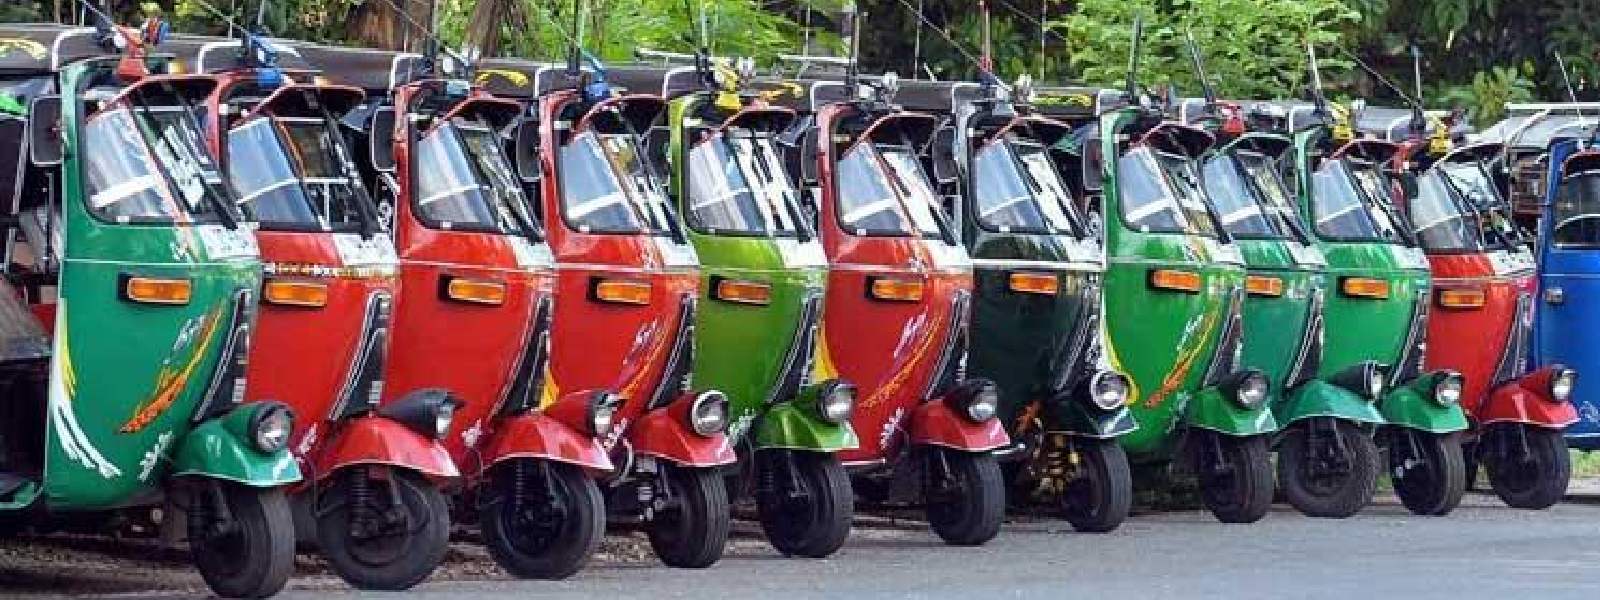 Sri Lanka to increase fuel quota for Tuks